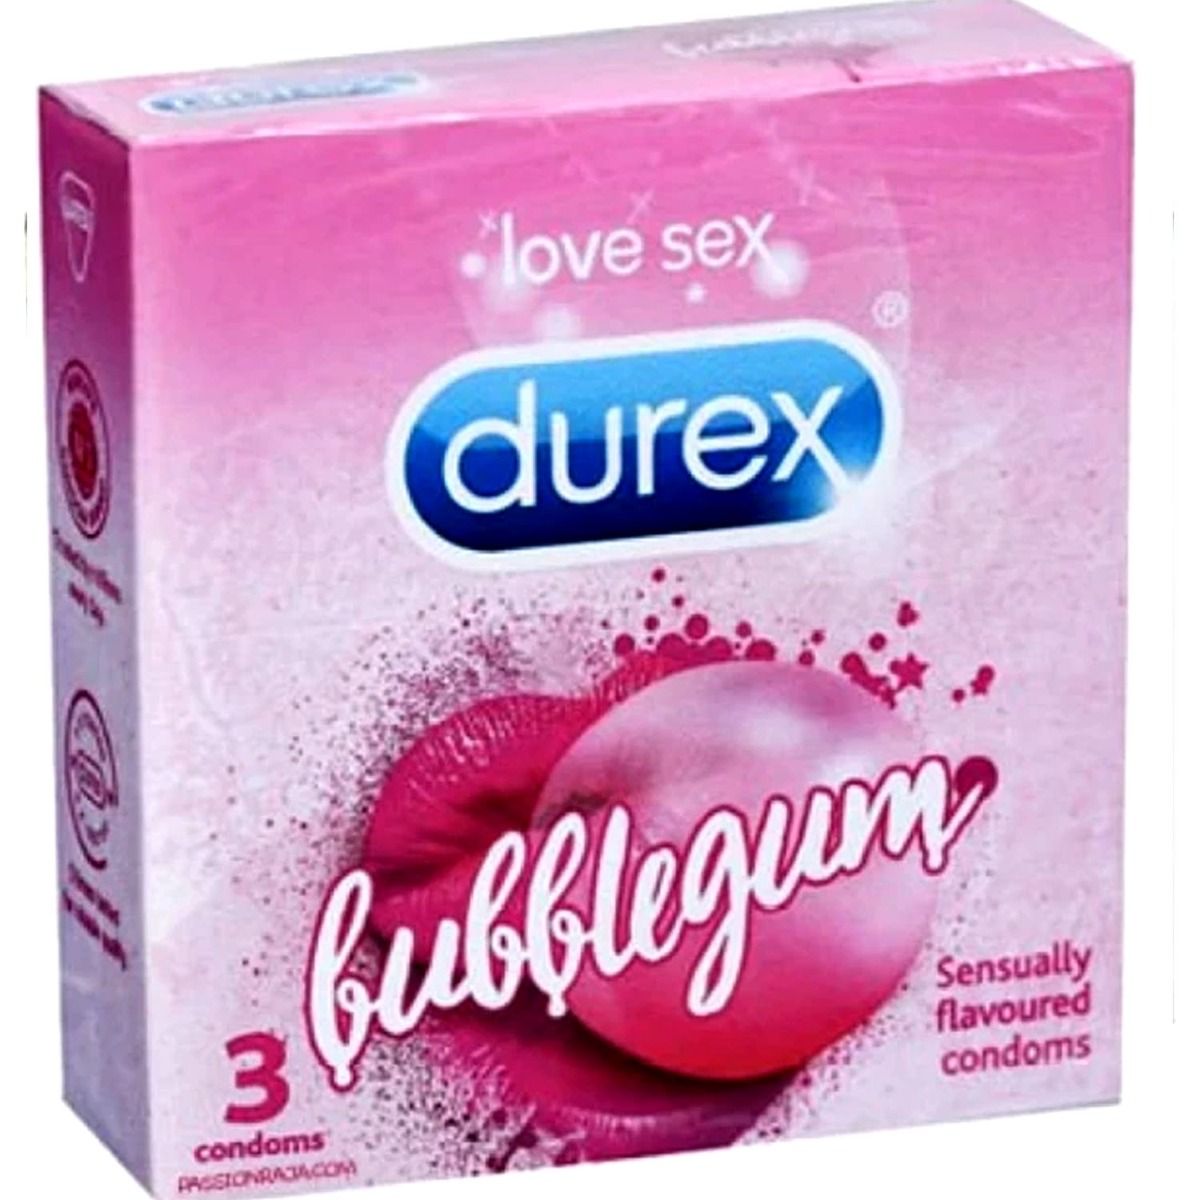 Durex Bubblegum Flavoured Condoms, 3 Count, Pack of 1 